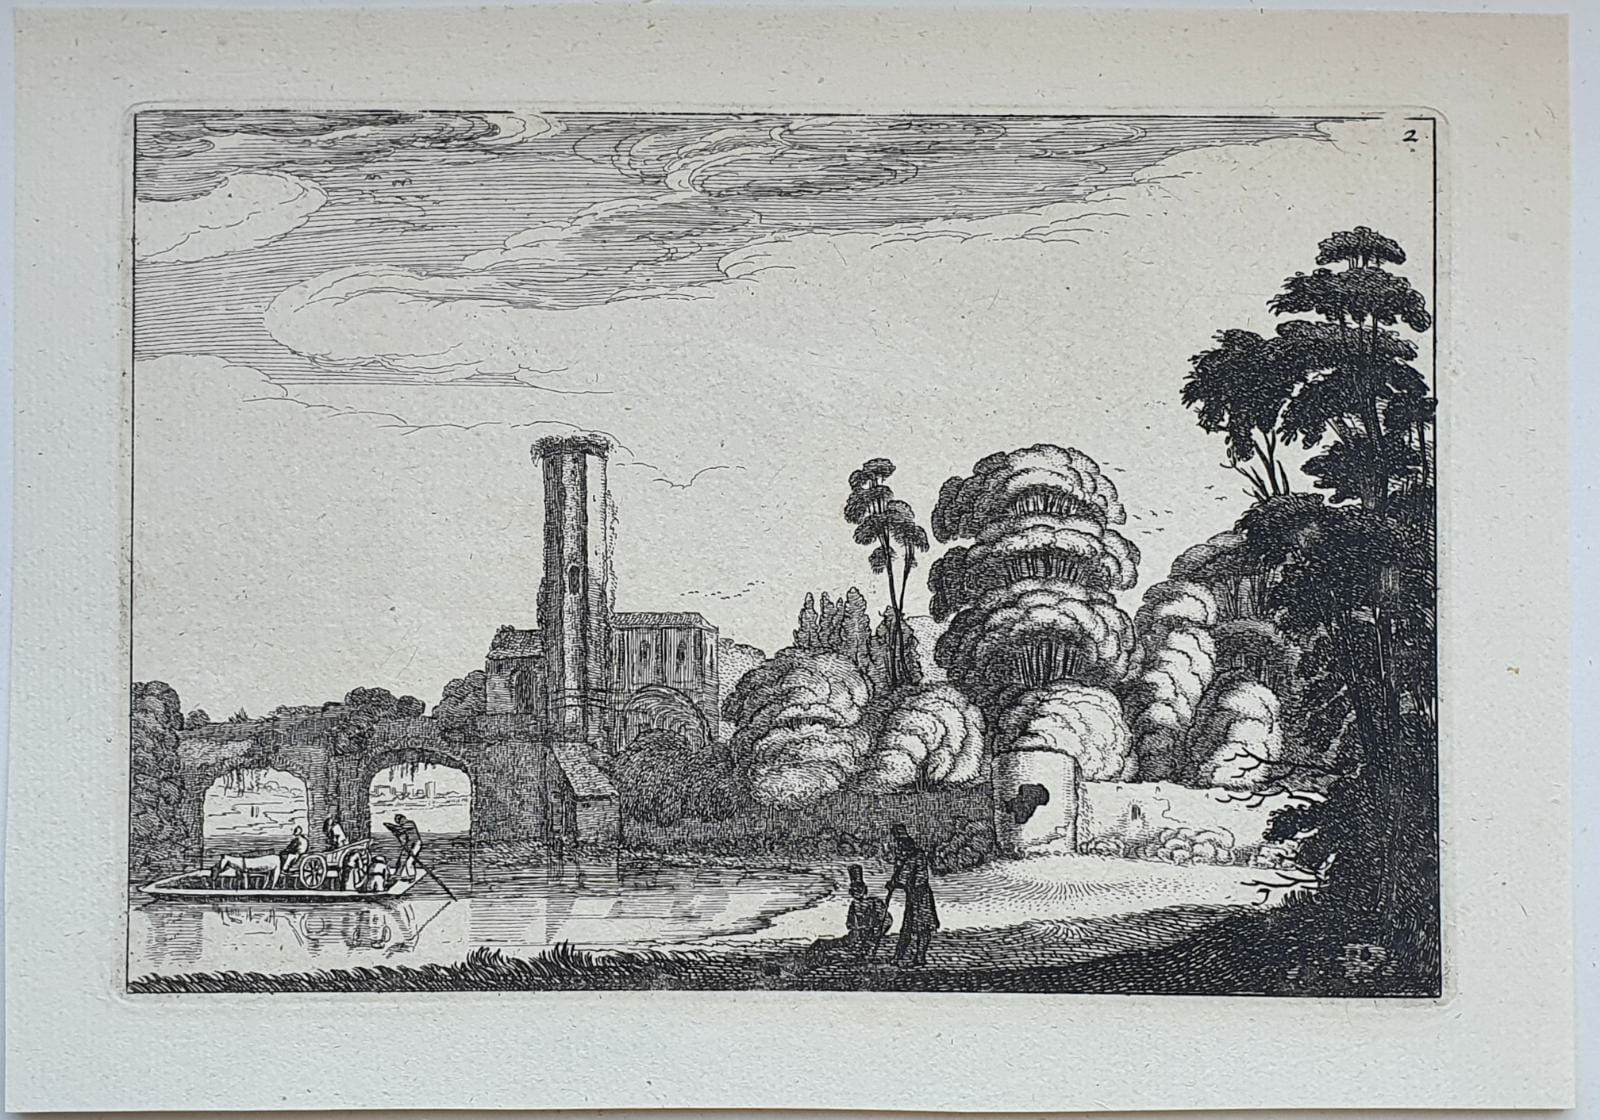 [Antique etching, ets, landscape print] J. v.d. Velde II, Ferry in front of a stone bridge (veerboot voor stenen brug), published before 1713.